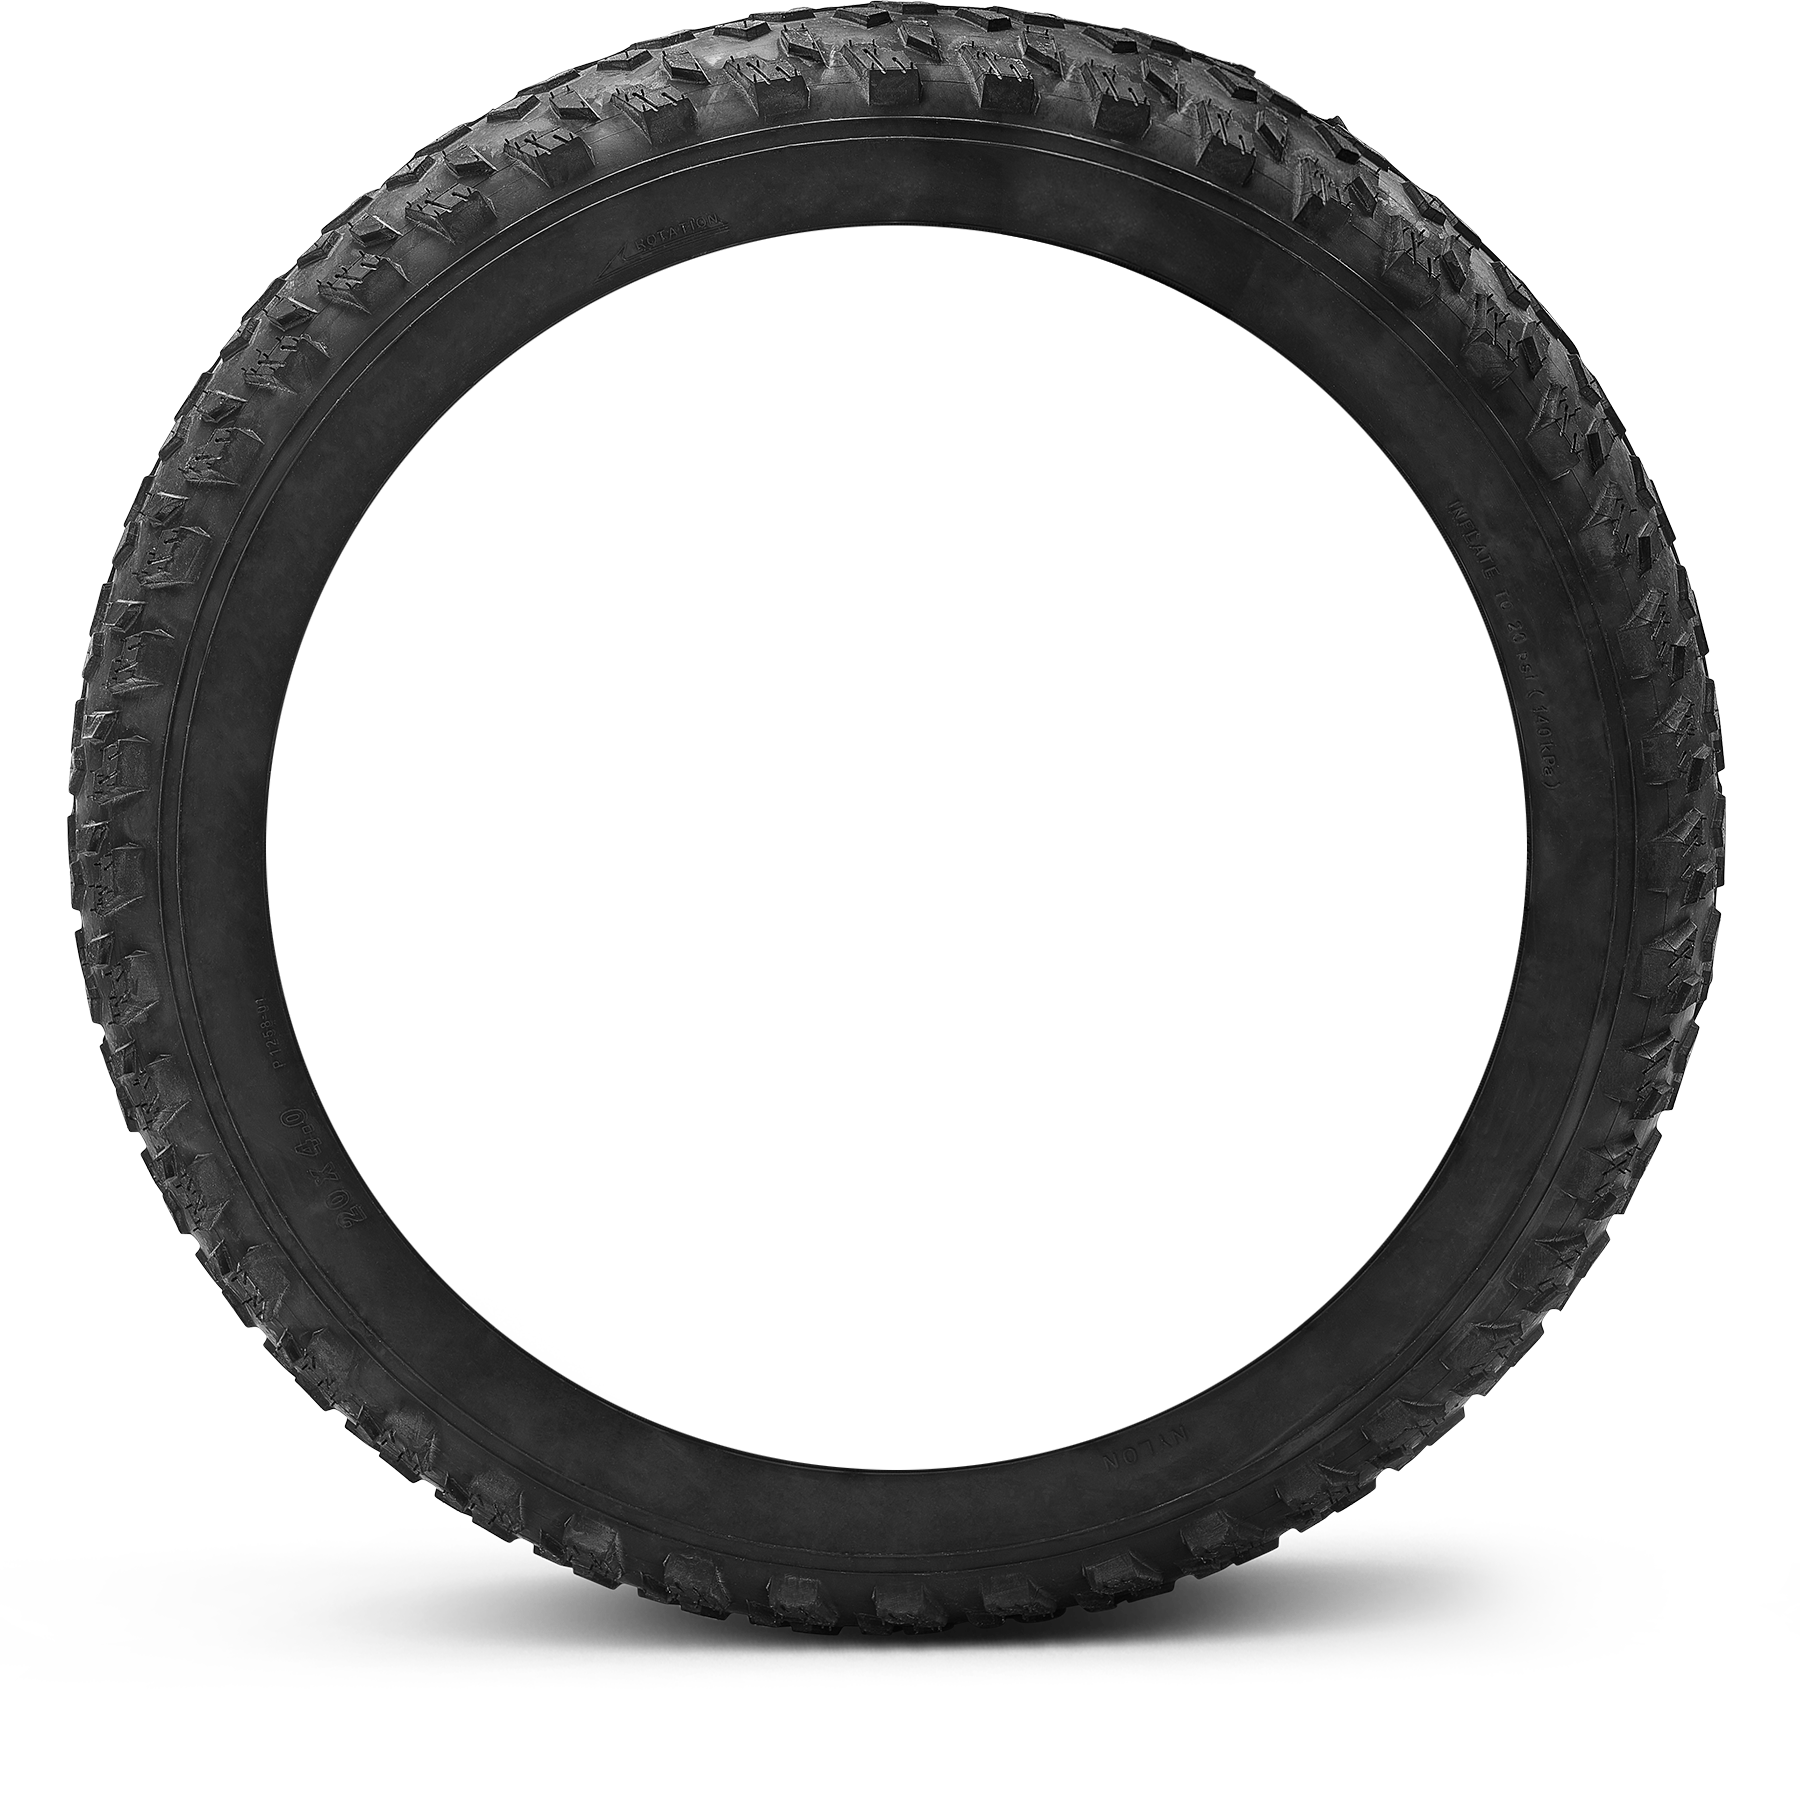 20 x 7-8 Knobby Tire